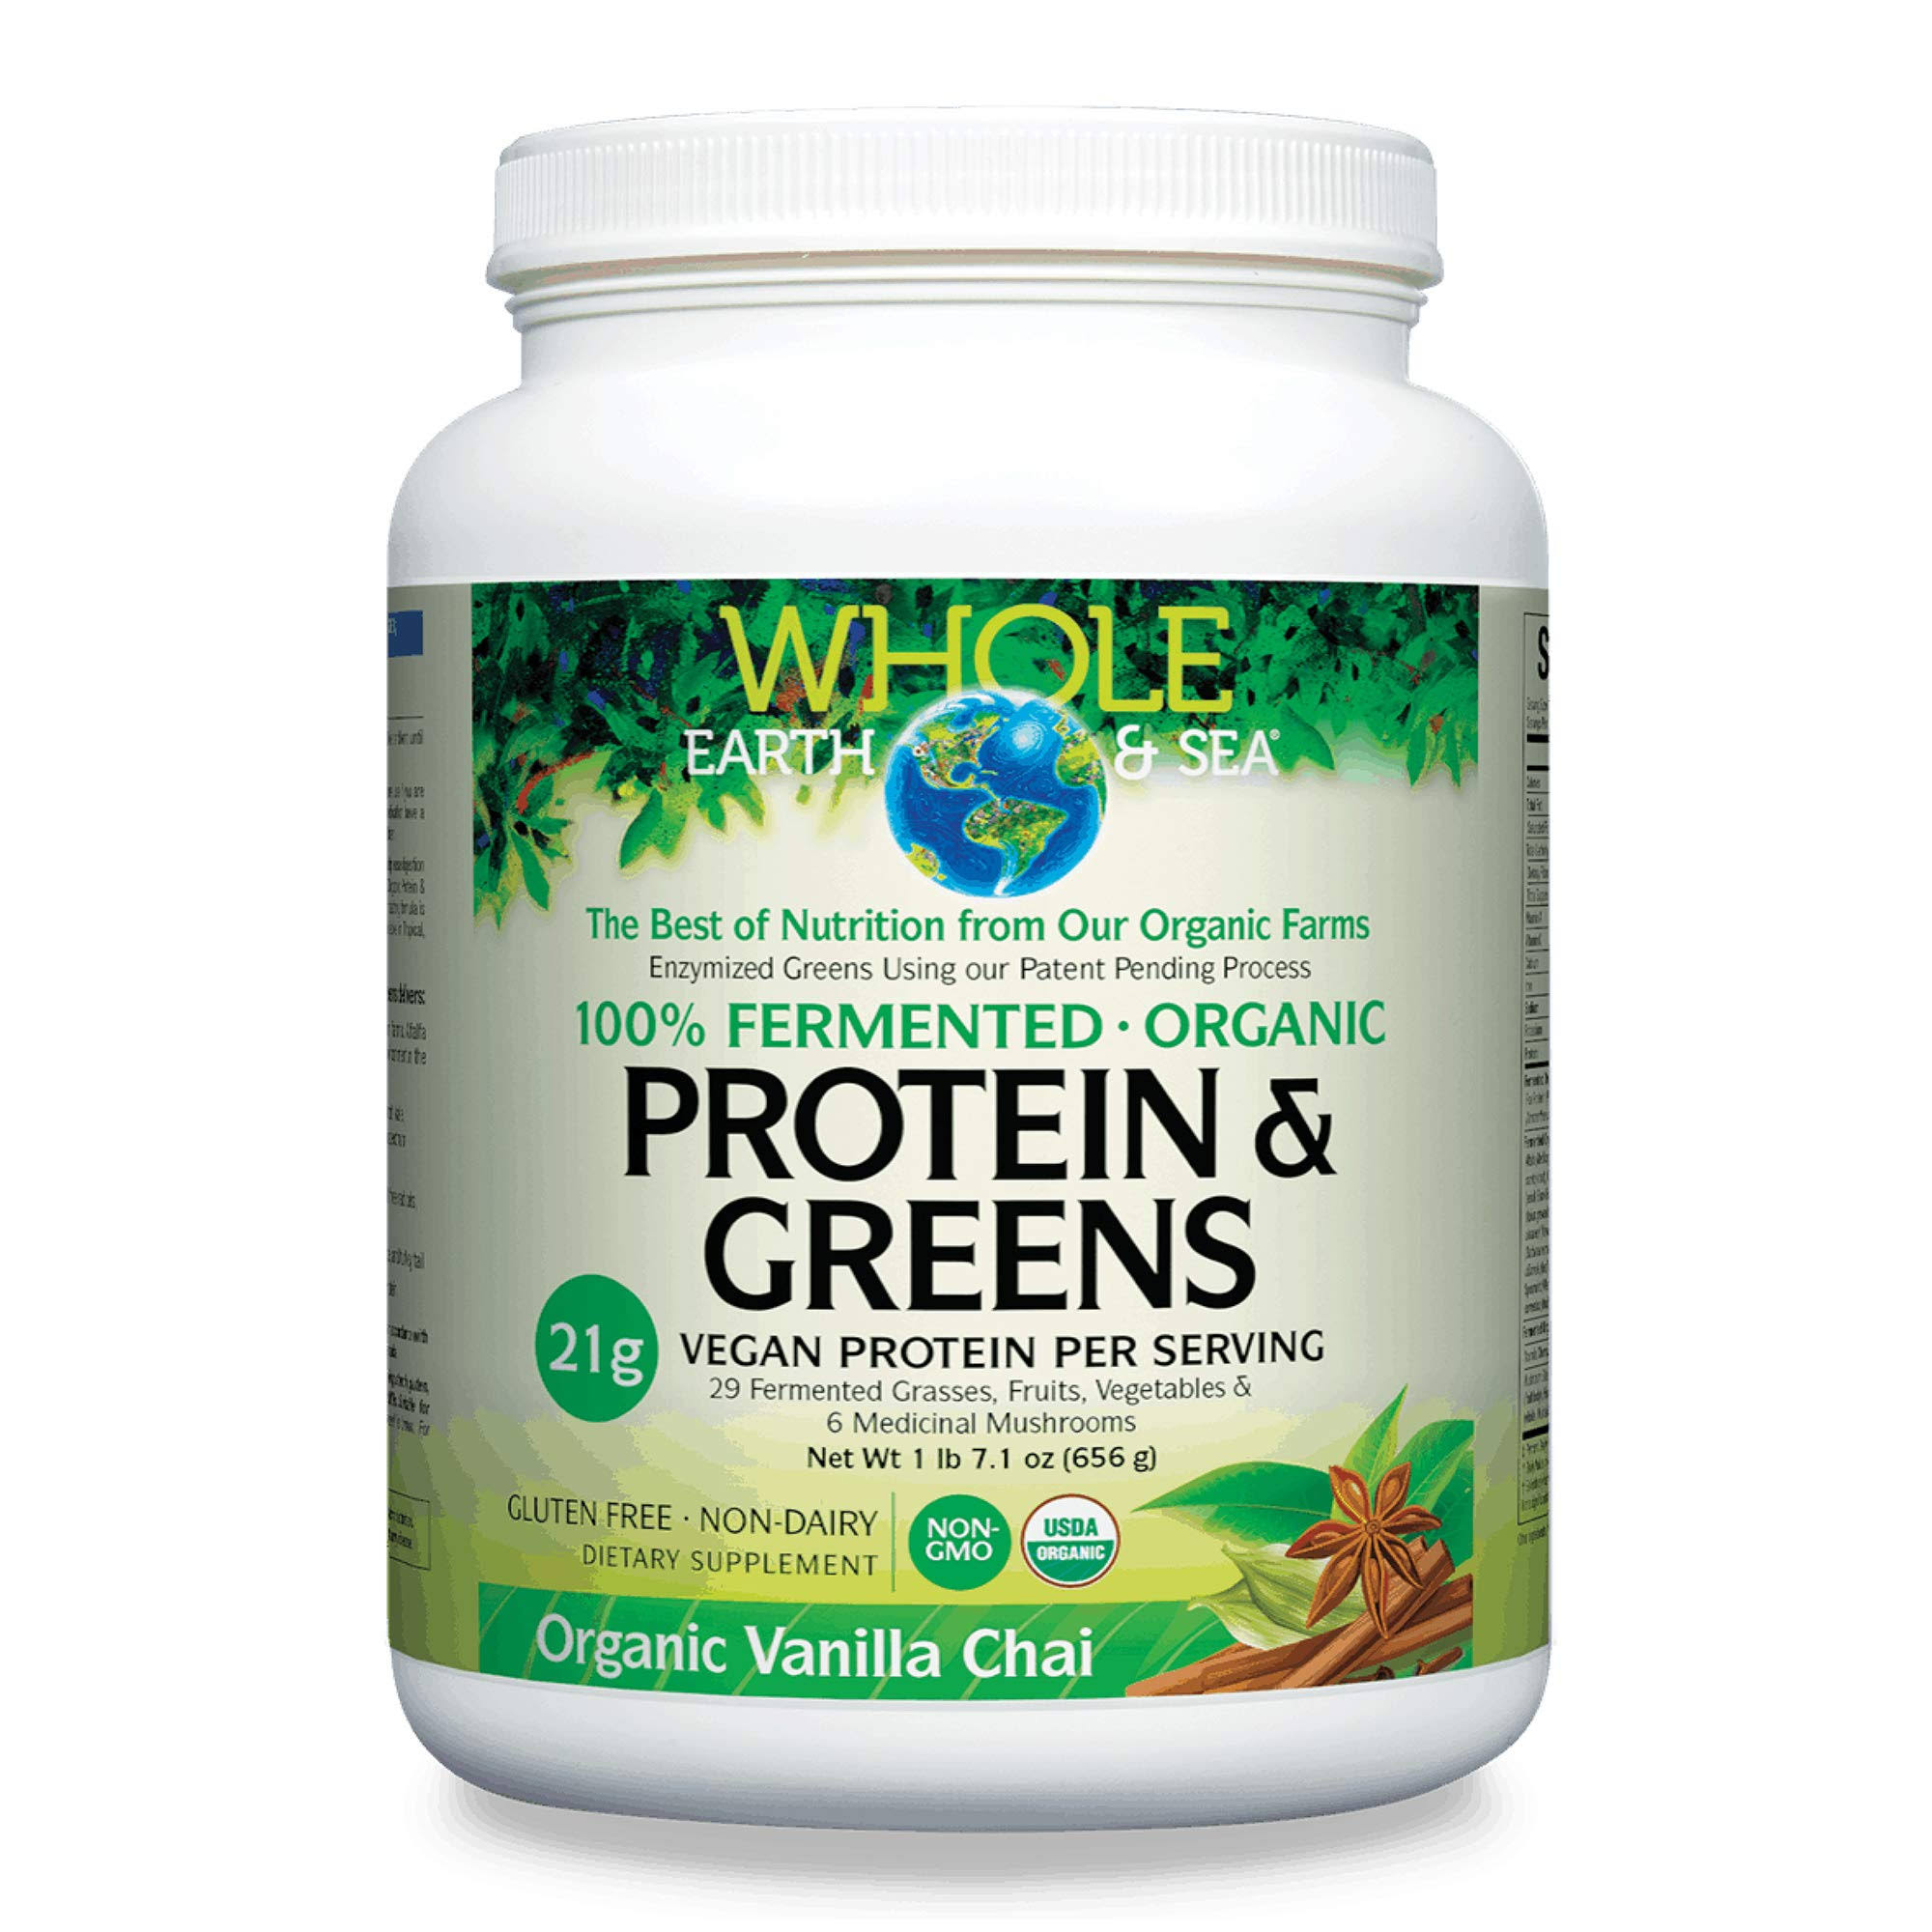 Whole Earth & Sea Fermented Organic Protein & Greens Vanilla Chai (656 g)